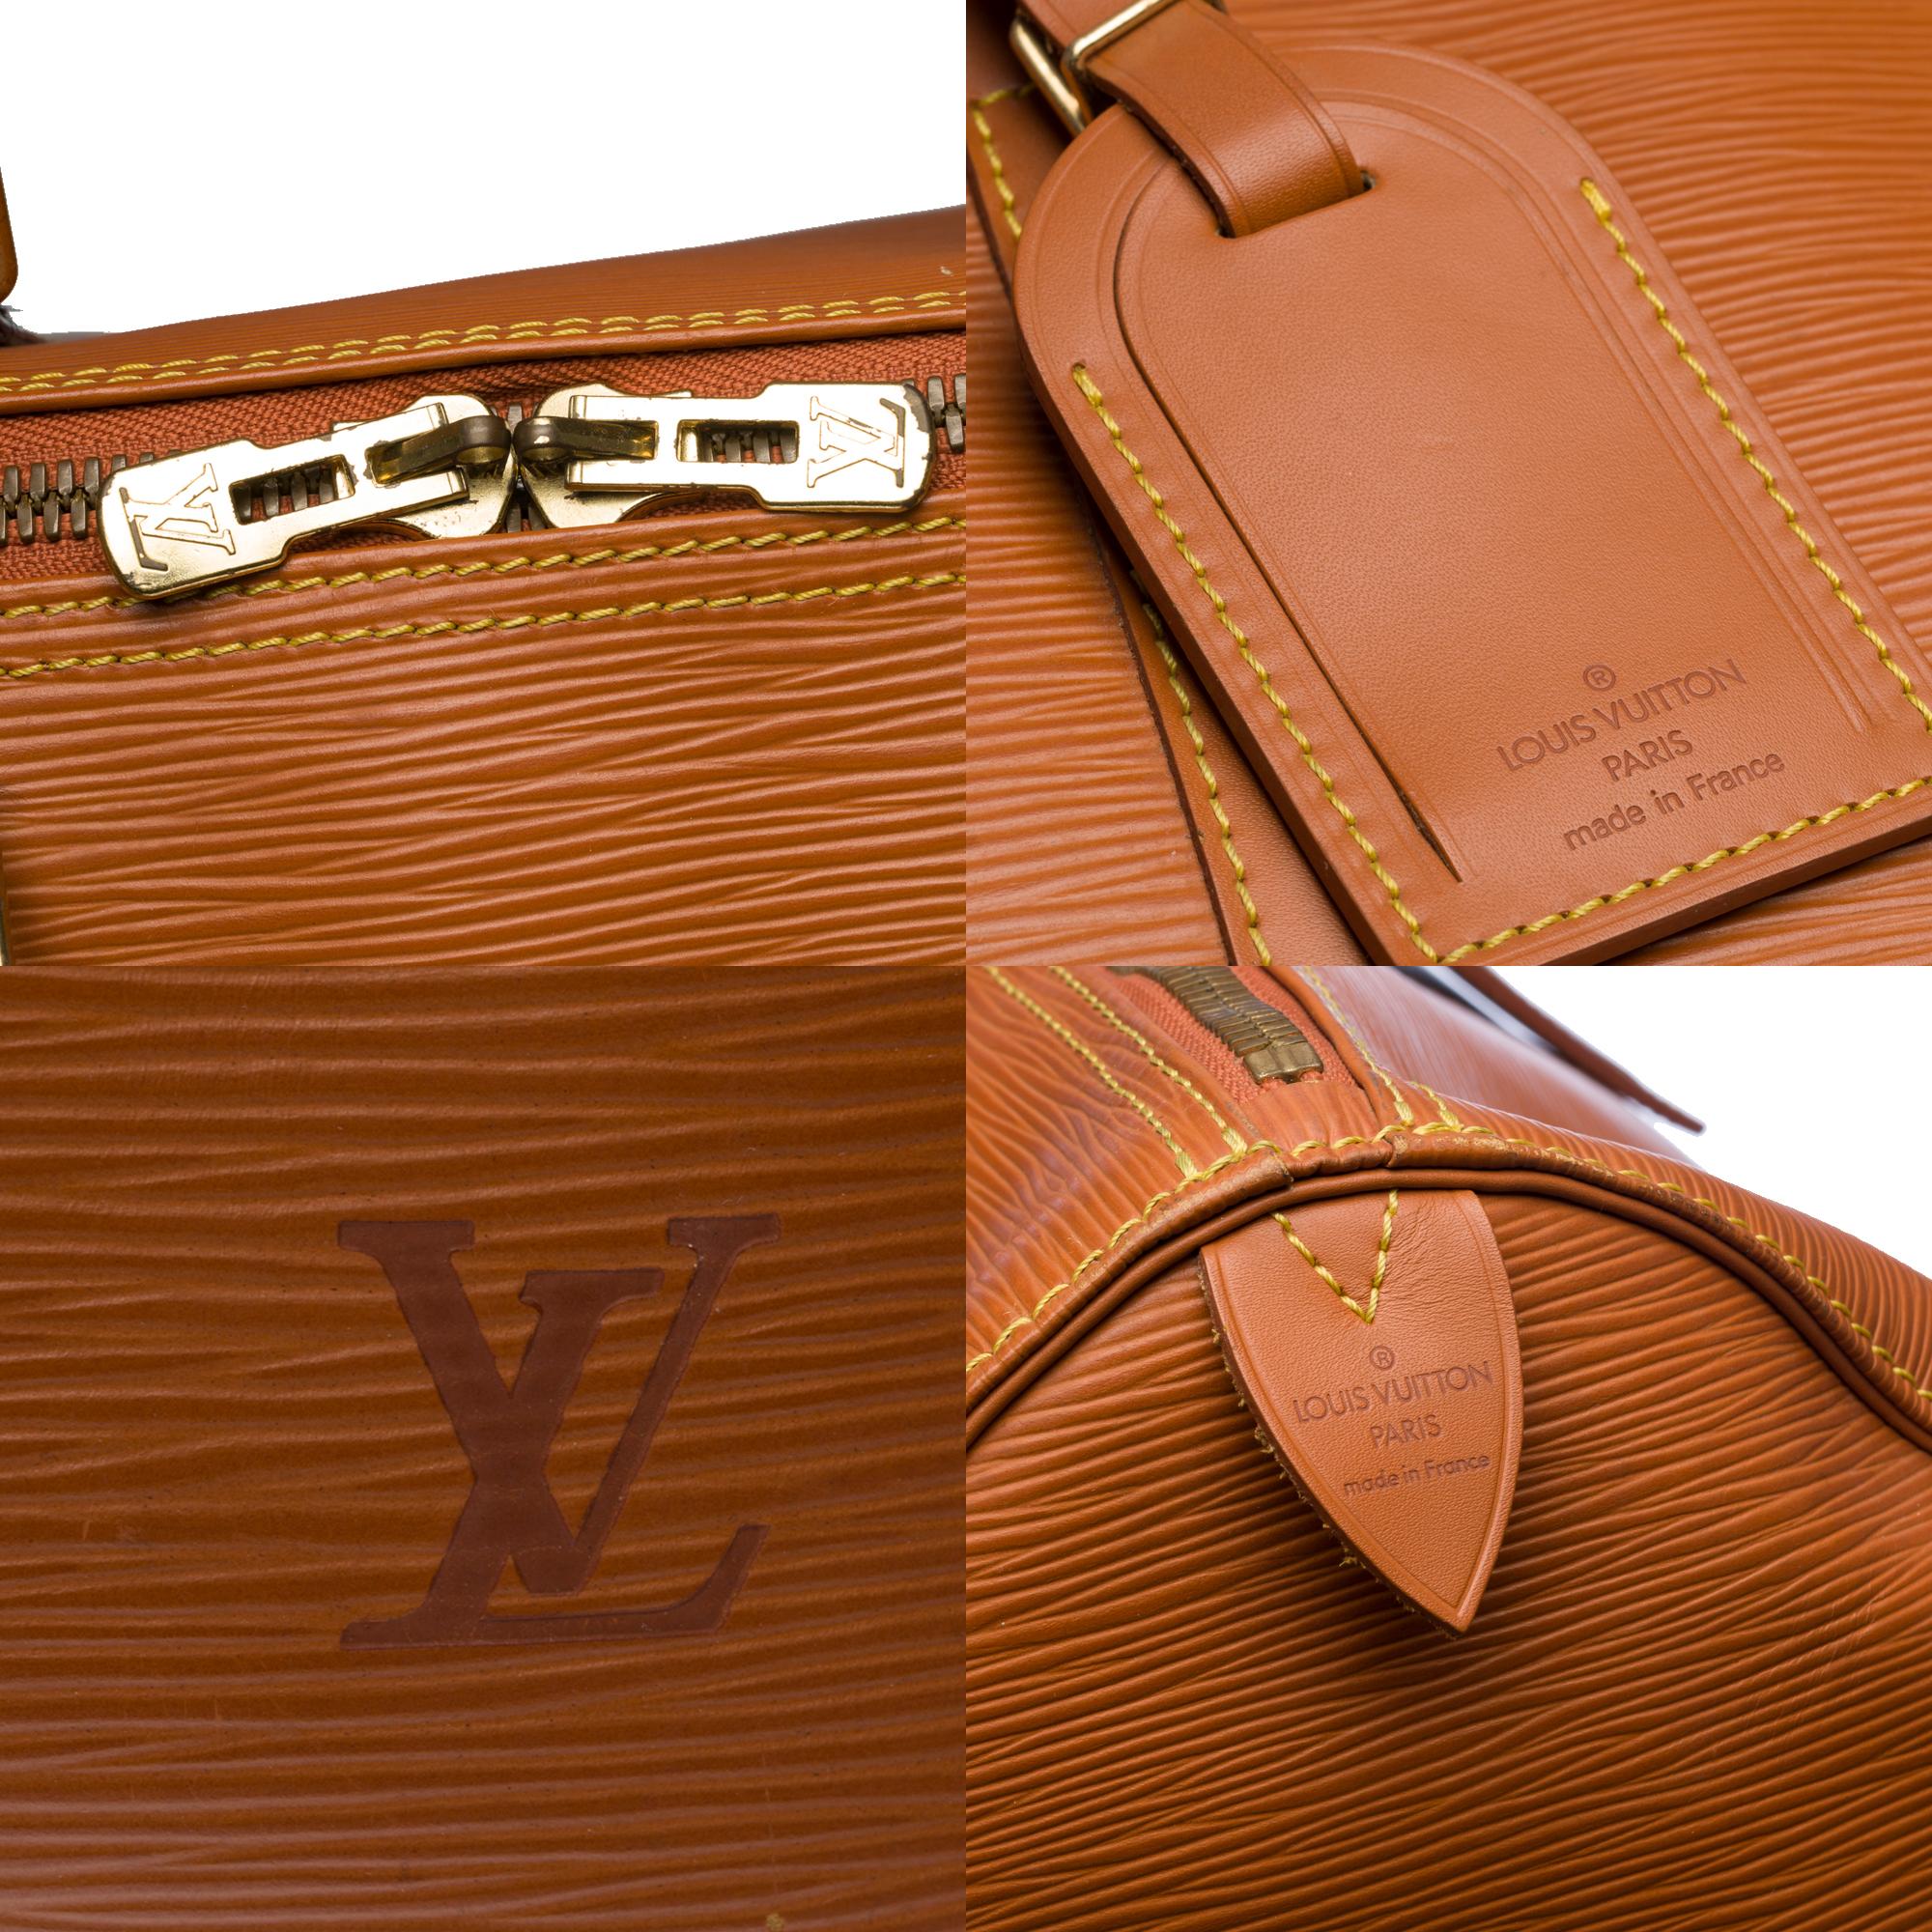 Women's or Men's Louis Vuitton Keepall 55 Travel bag in cognac épi leather